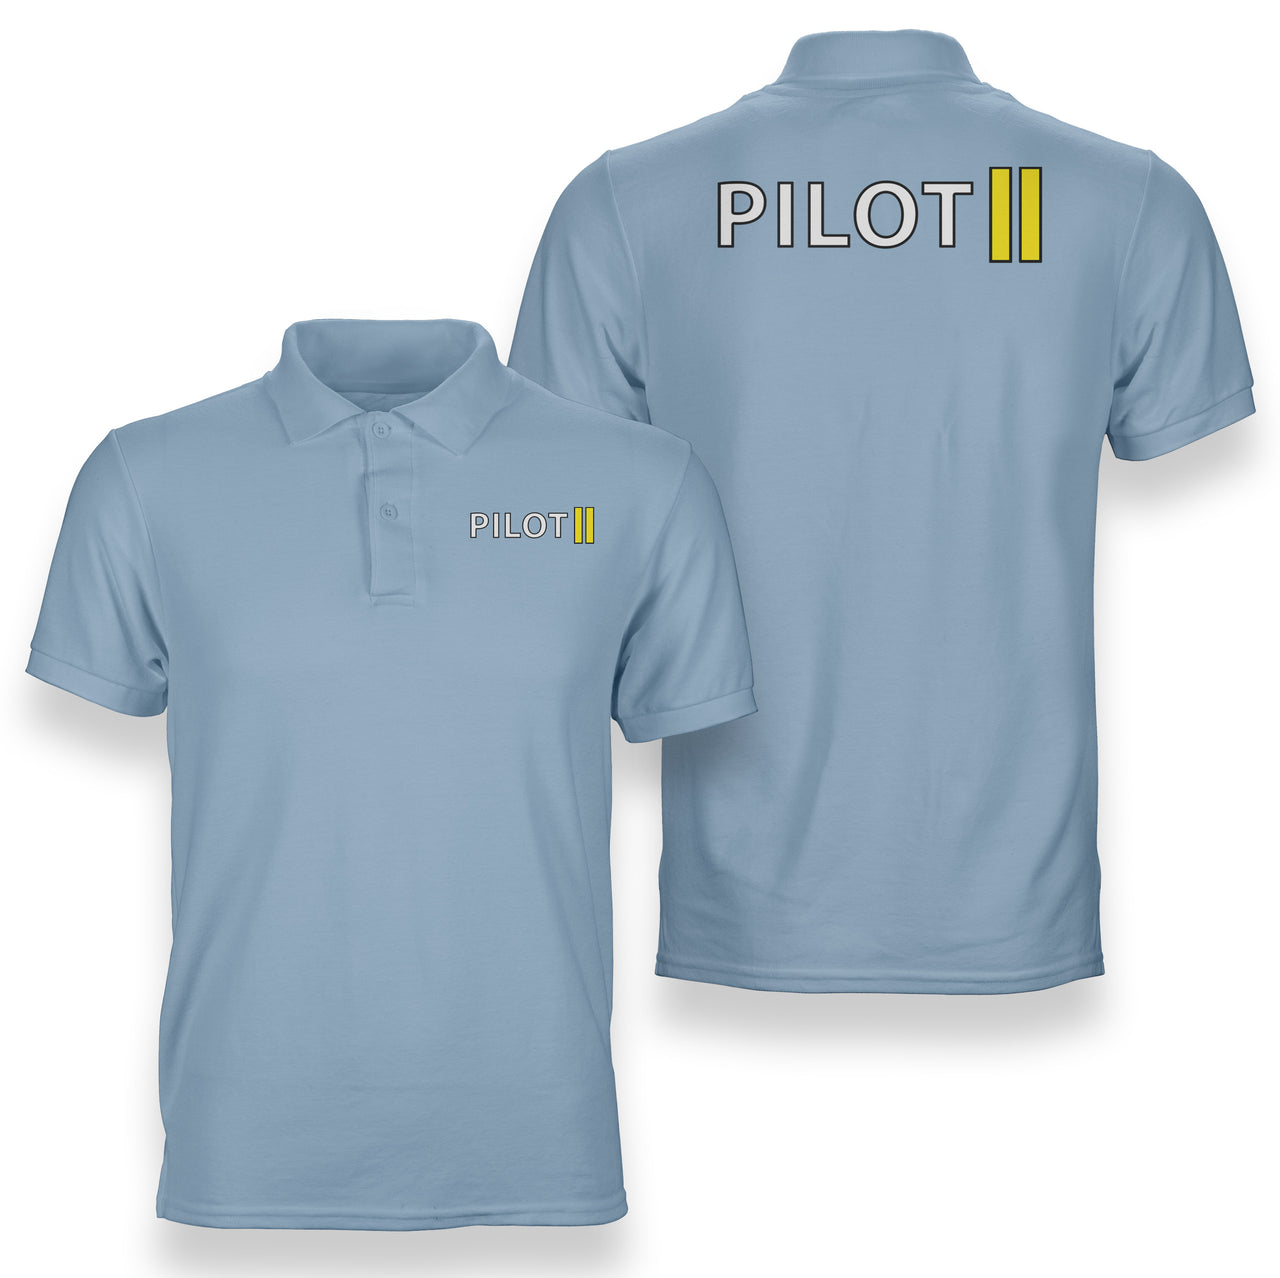 Pilot & Stripes (2 Lines) Designed Double Side Polo T-Shirts